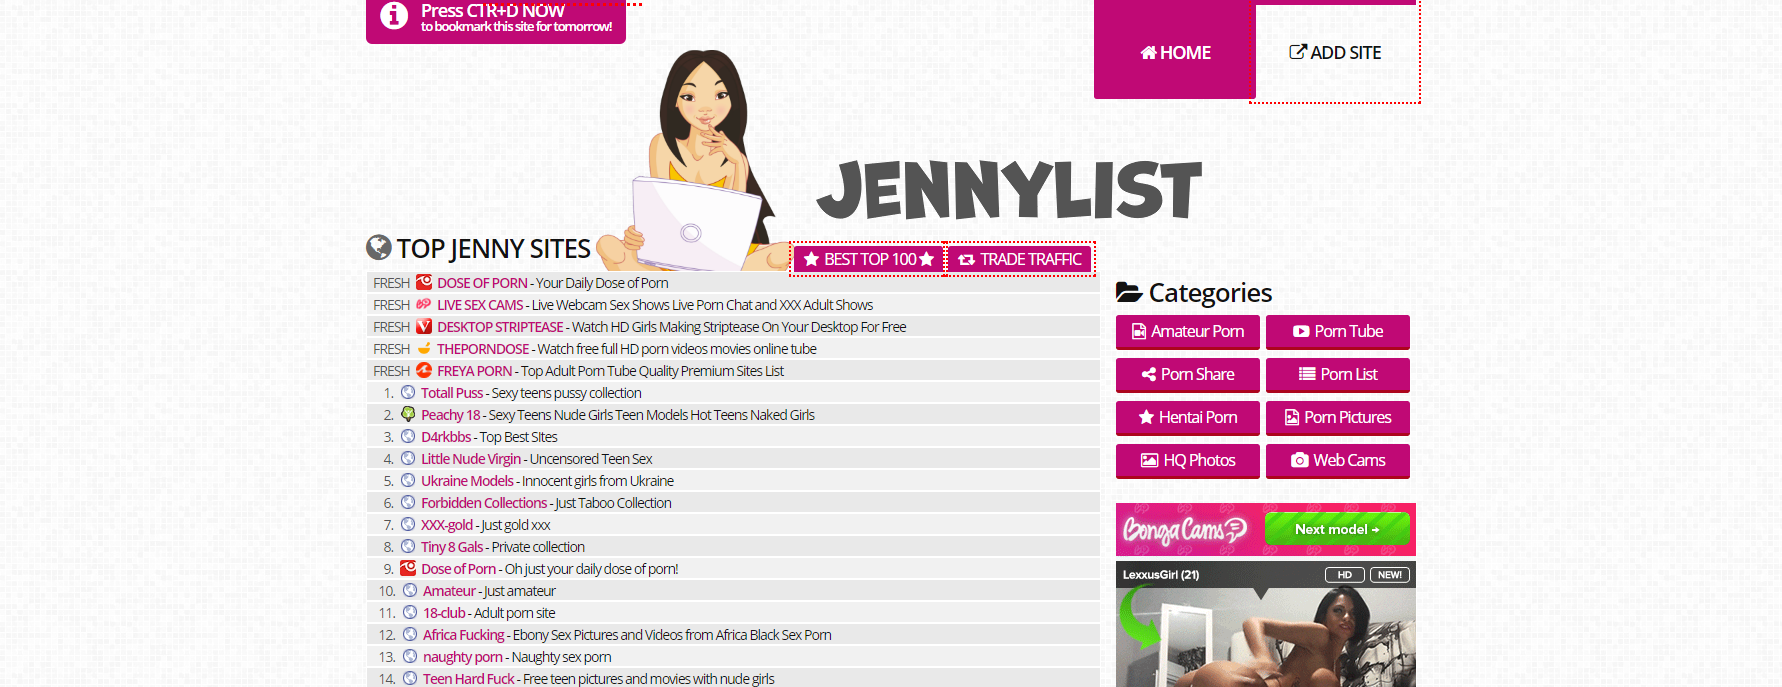 Jenny List